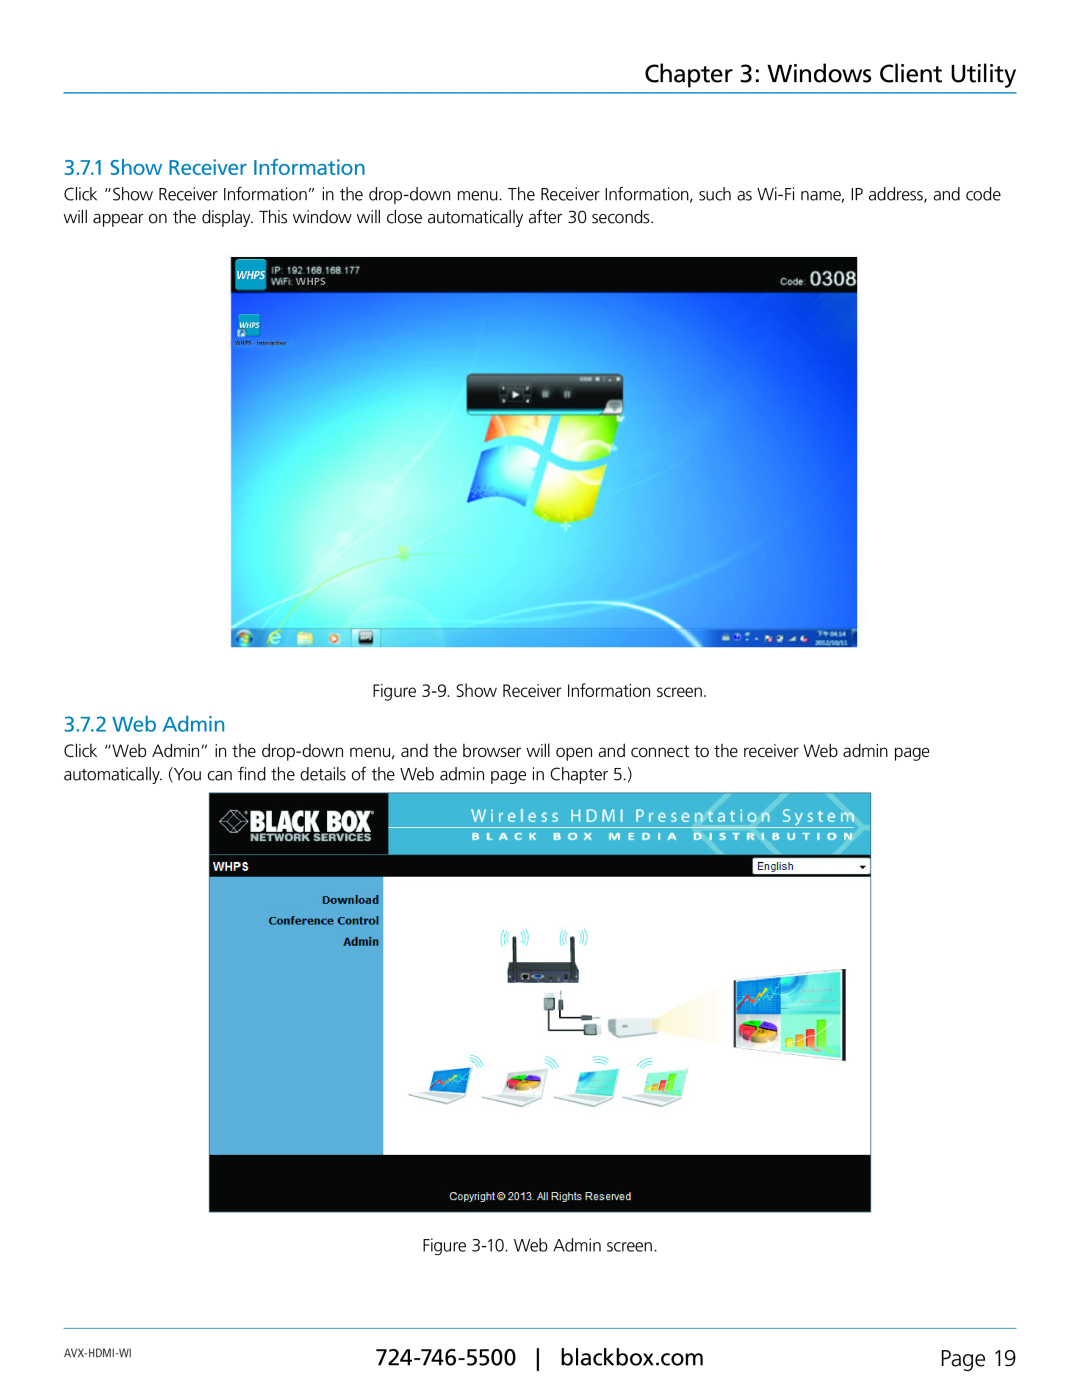 Black Box Wireless HDMI Presentation System (WHPS) Show Receiver Information, Web Admin, Windows Client Utility, Page 